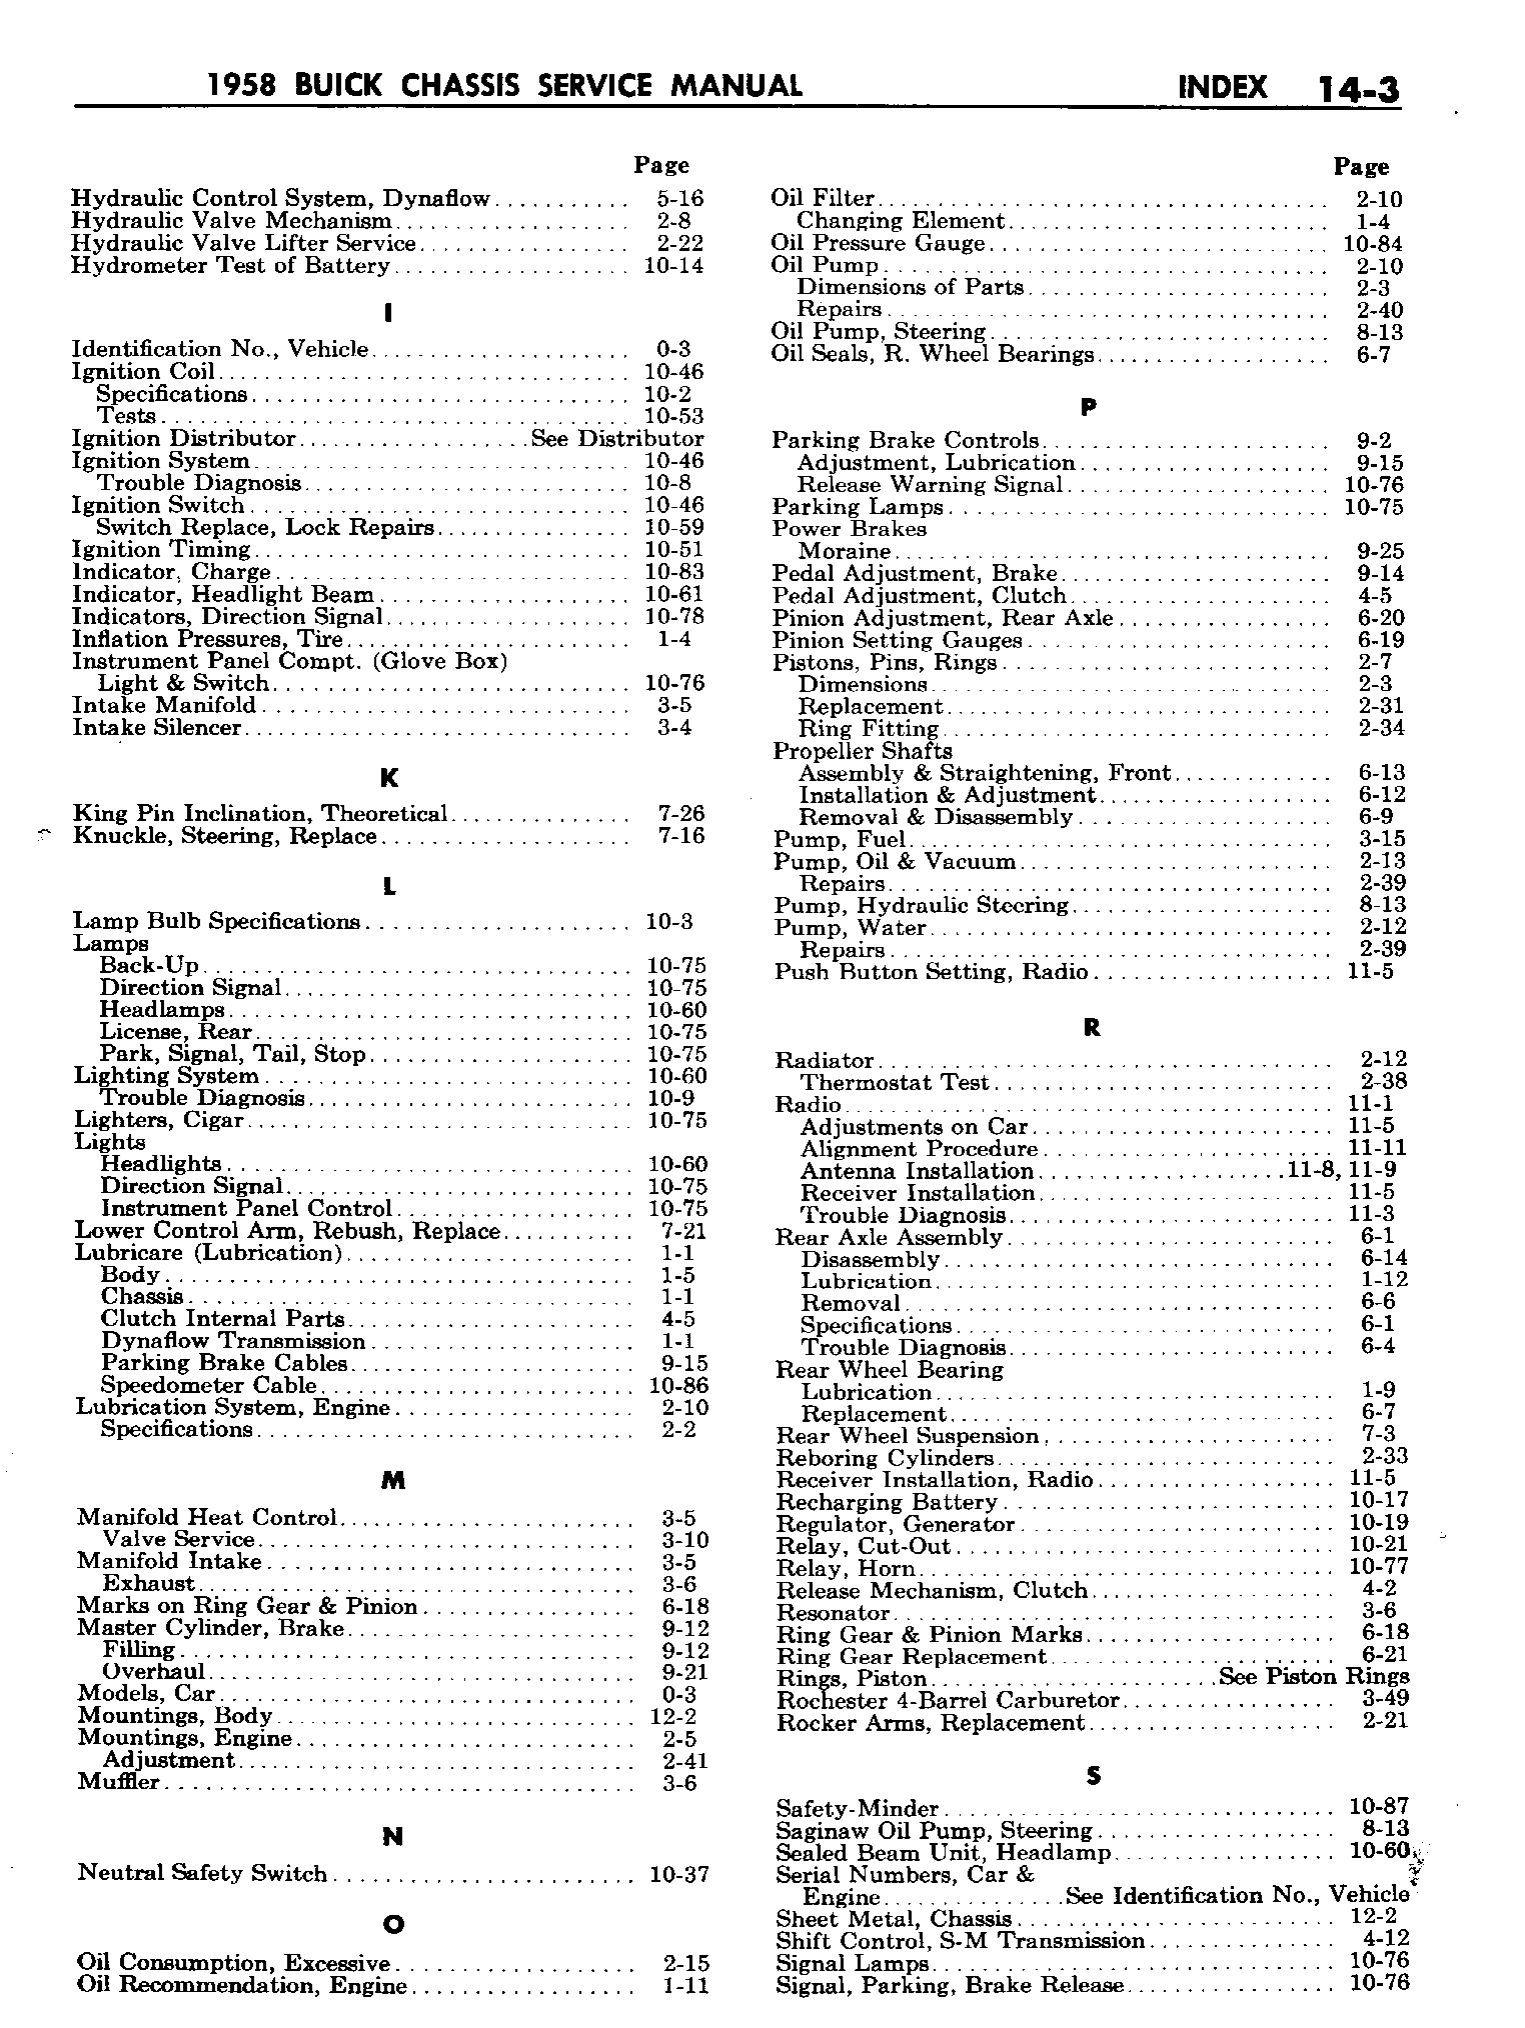 n_14 1958 Buick Shop Manual - Index_3.jpg